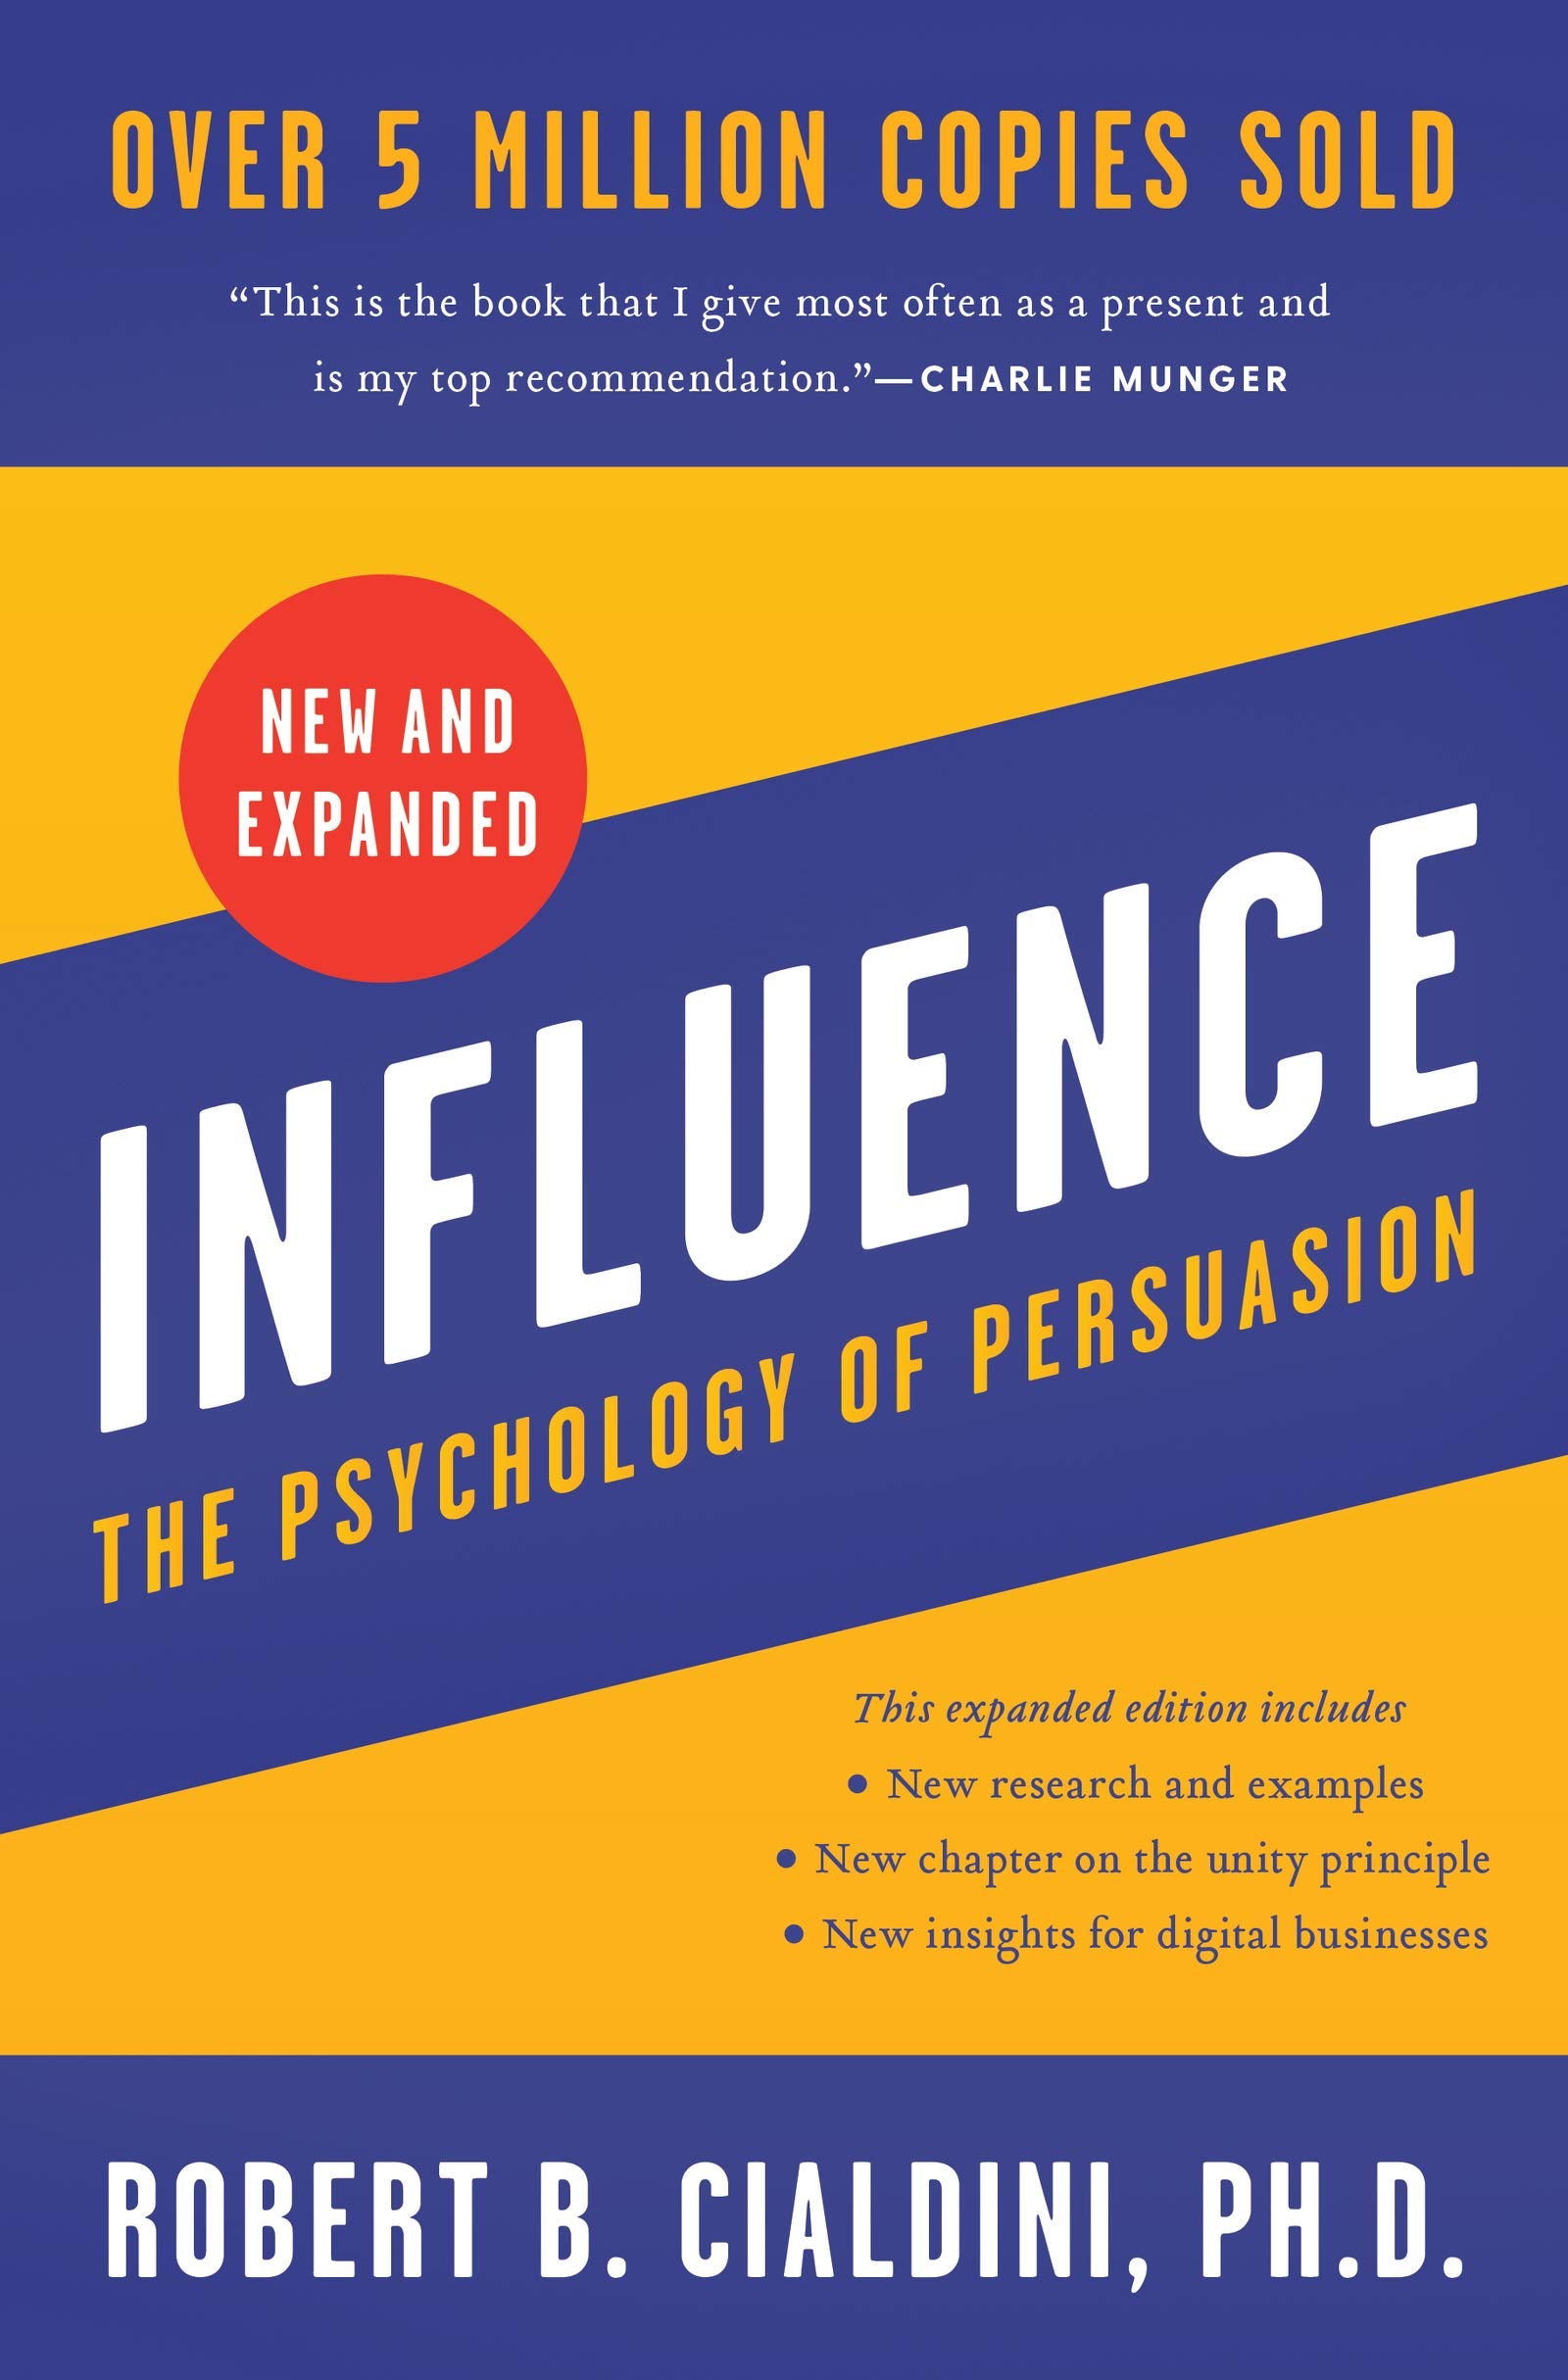 Robert Cialdini's Principles of Persuasion